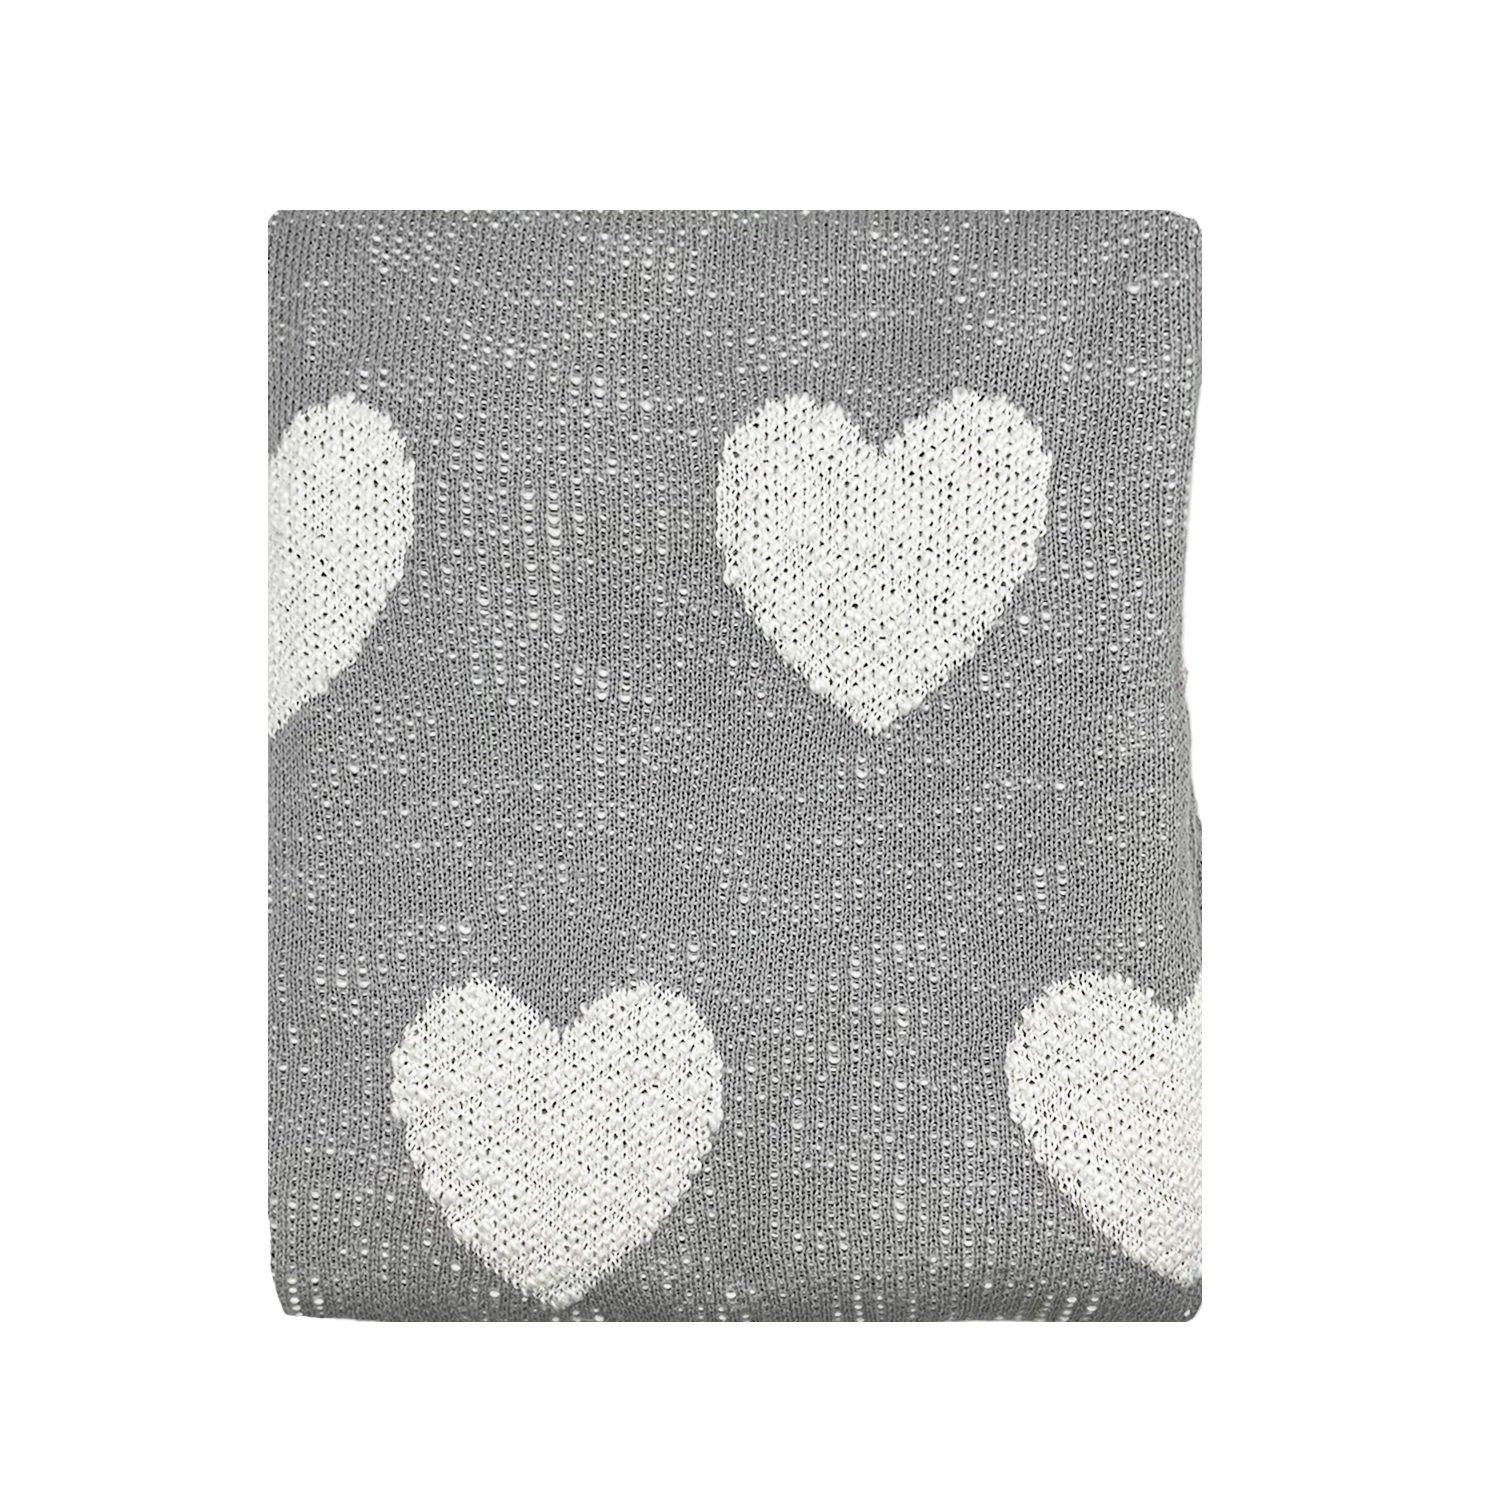 Textured Knitted Heart Throw Light Grey 125x150cm Gift